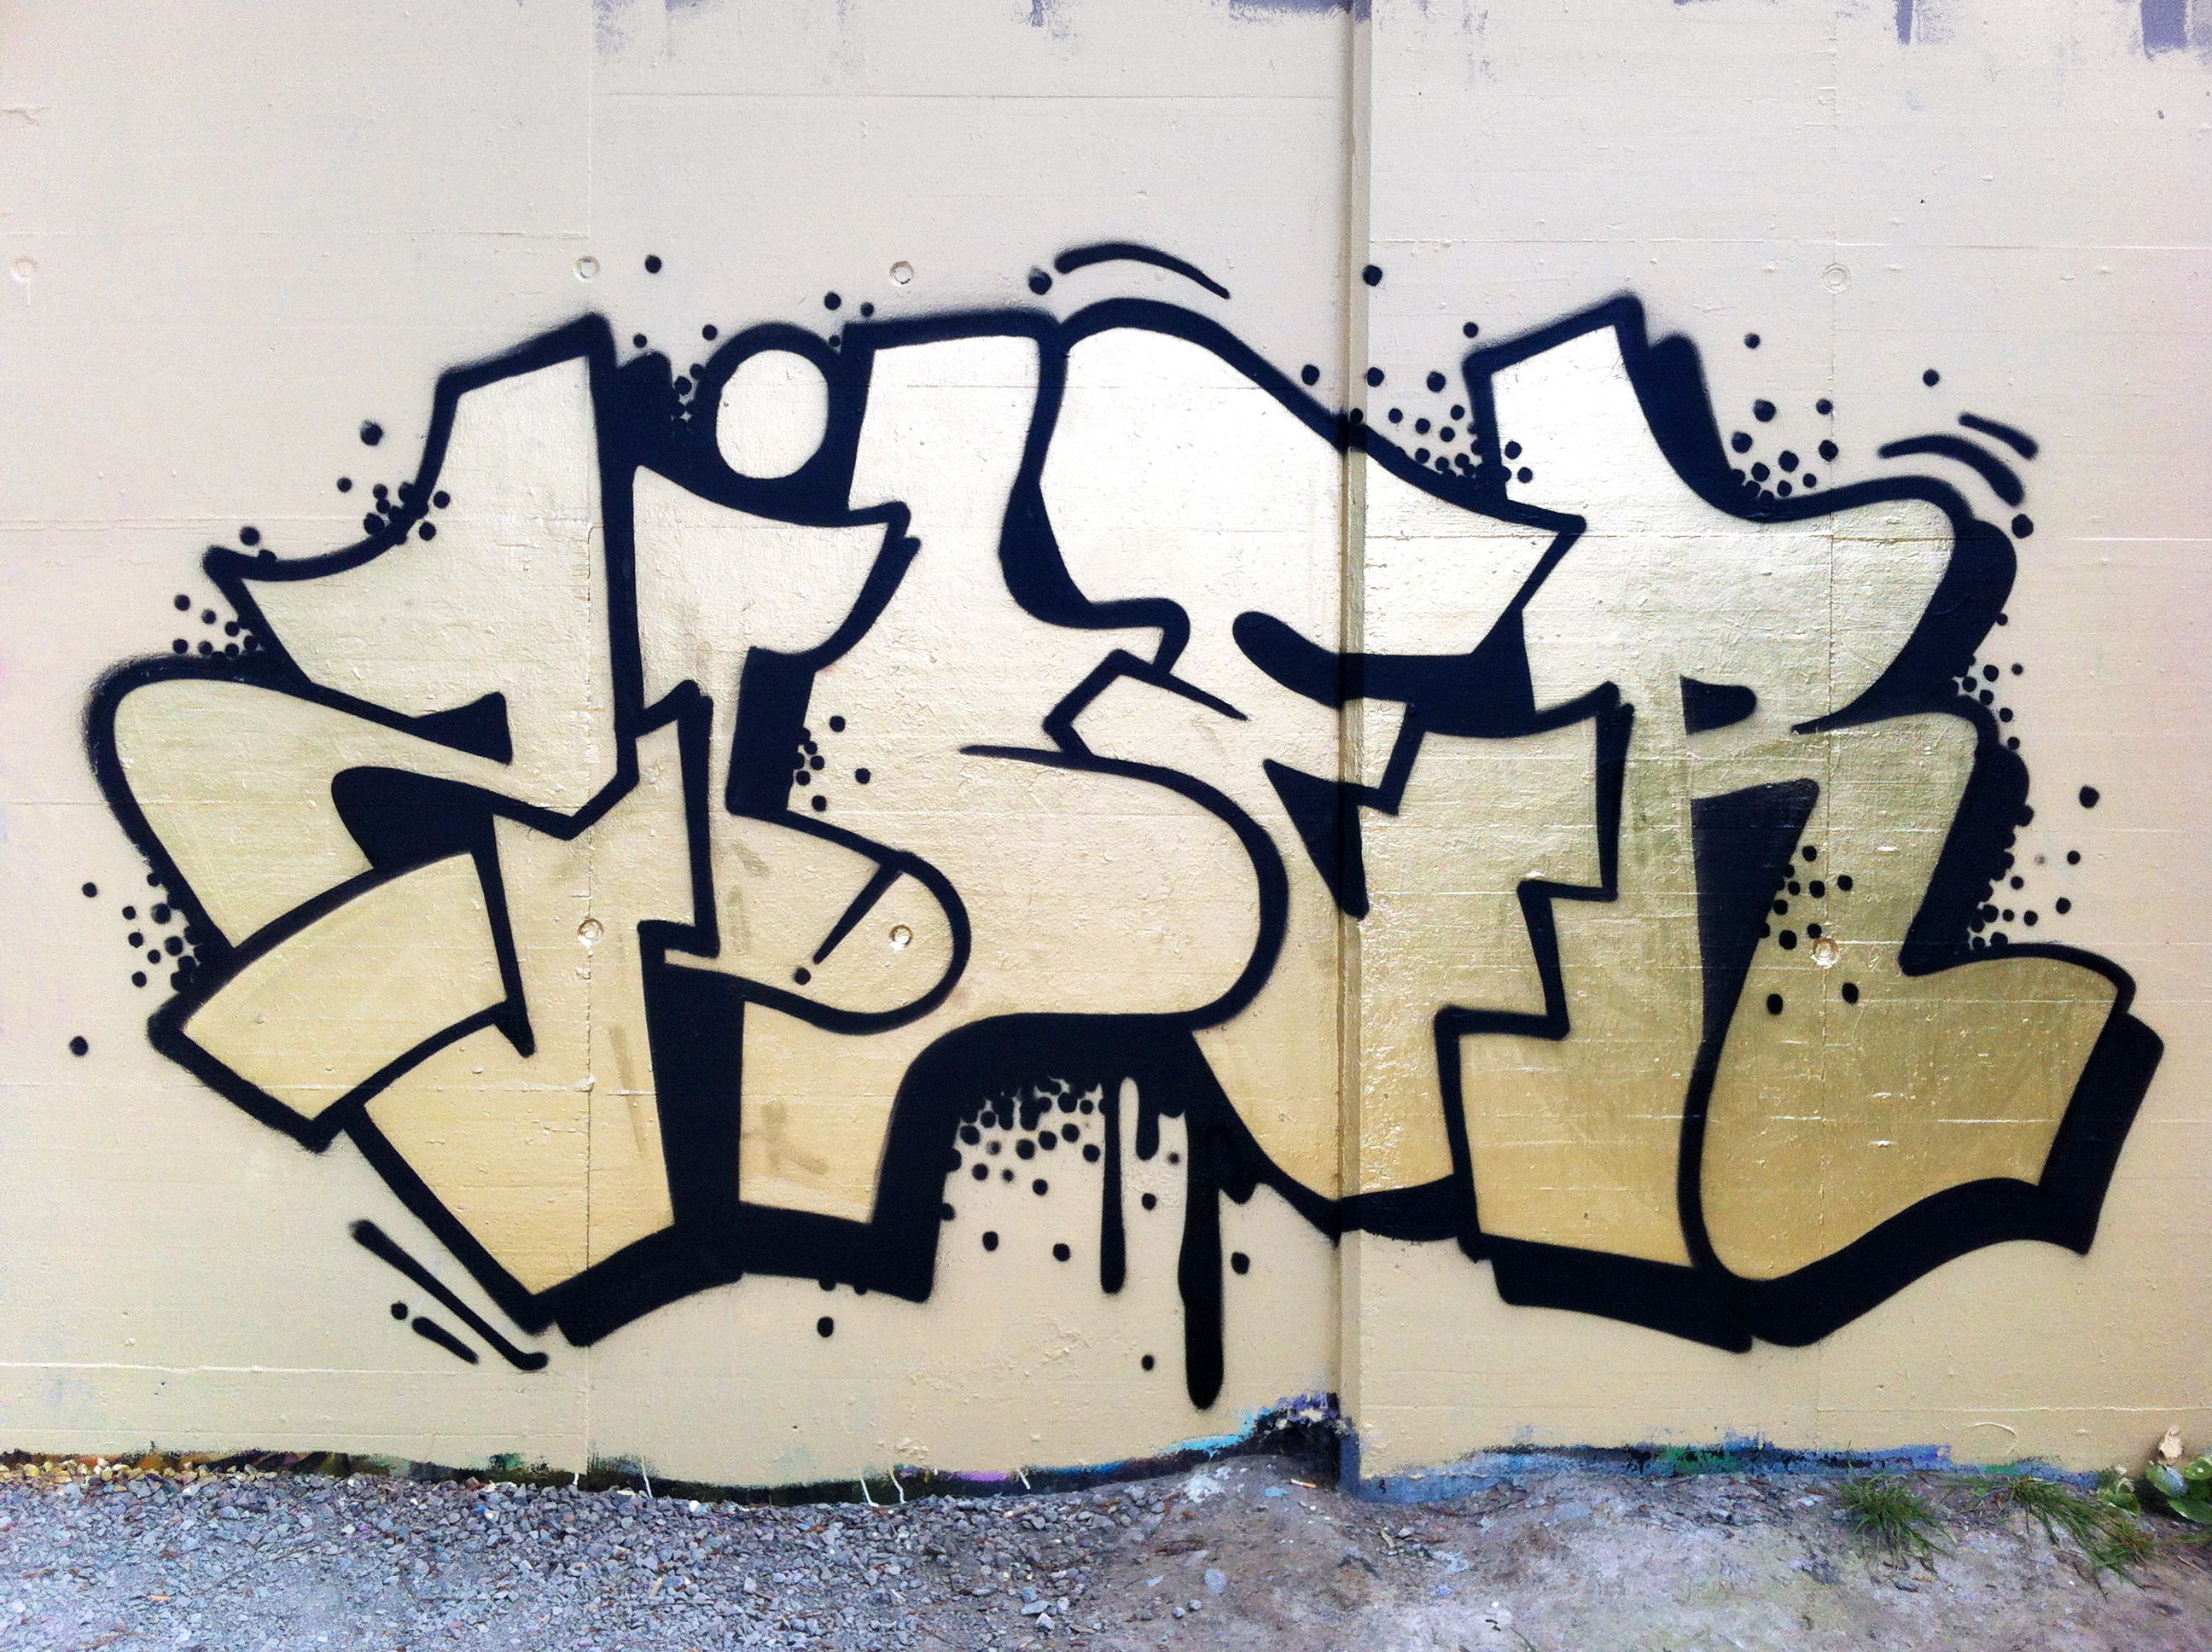 ziber graffiti gold | graffiti | Pinterest | Graffiti, Street art ...